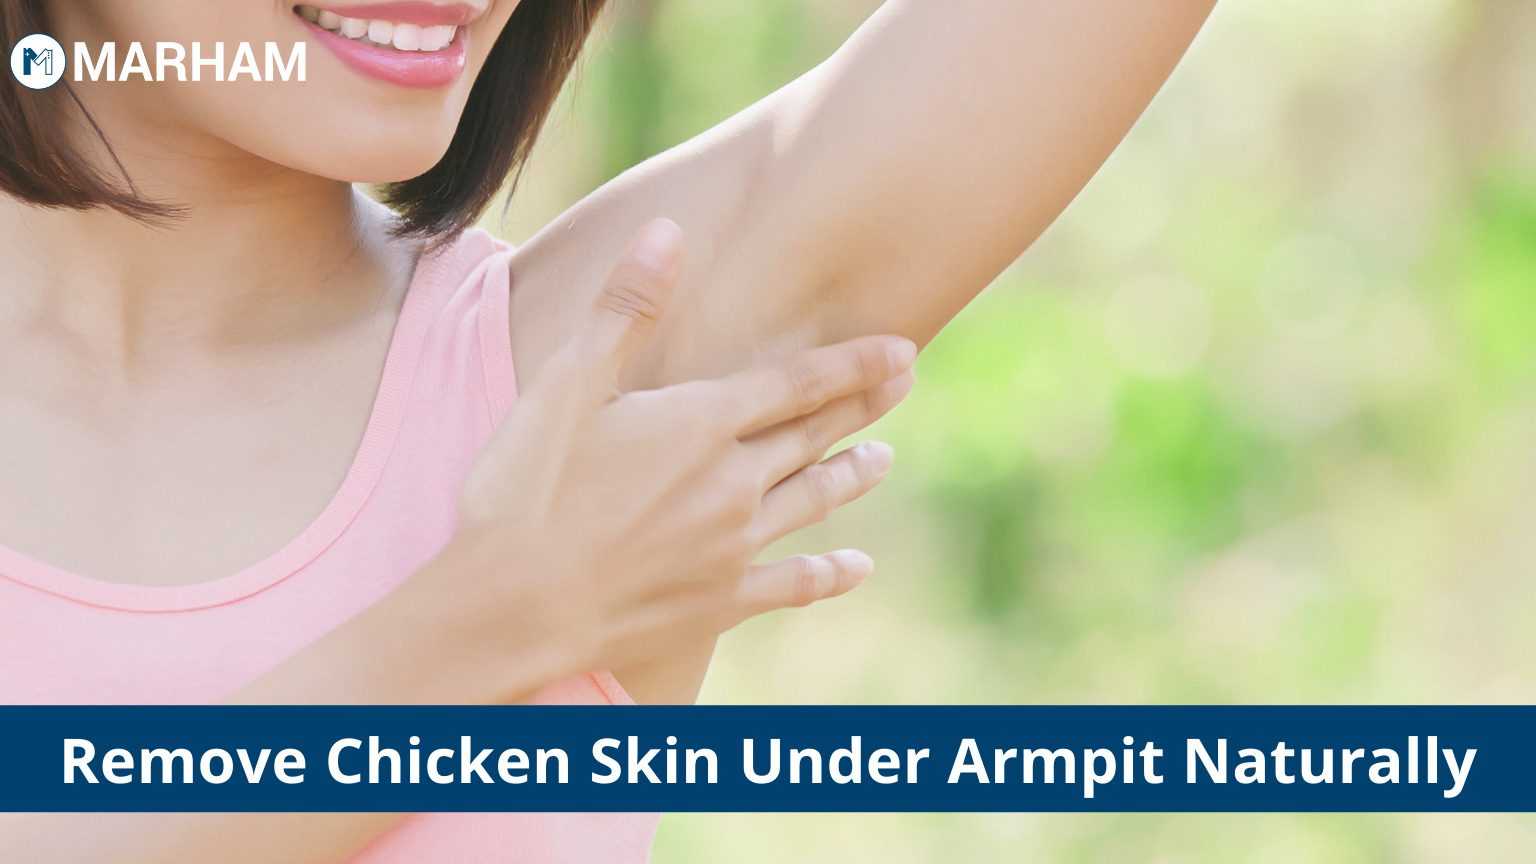 How to Remove Chicken Skin under Armpit Naturally? | Marham